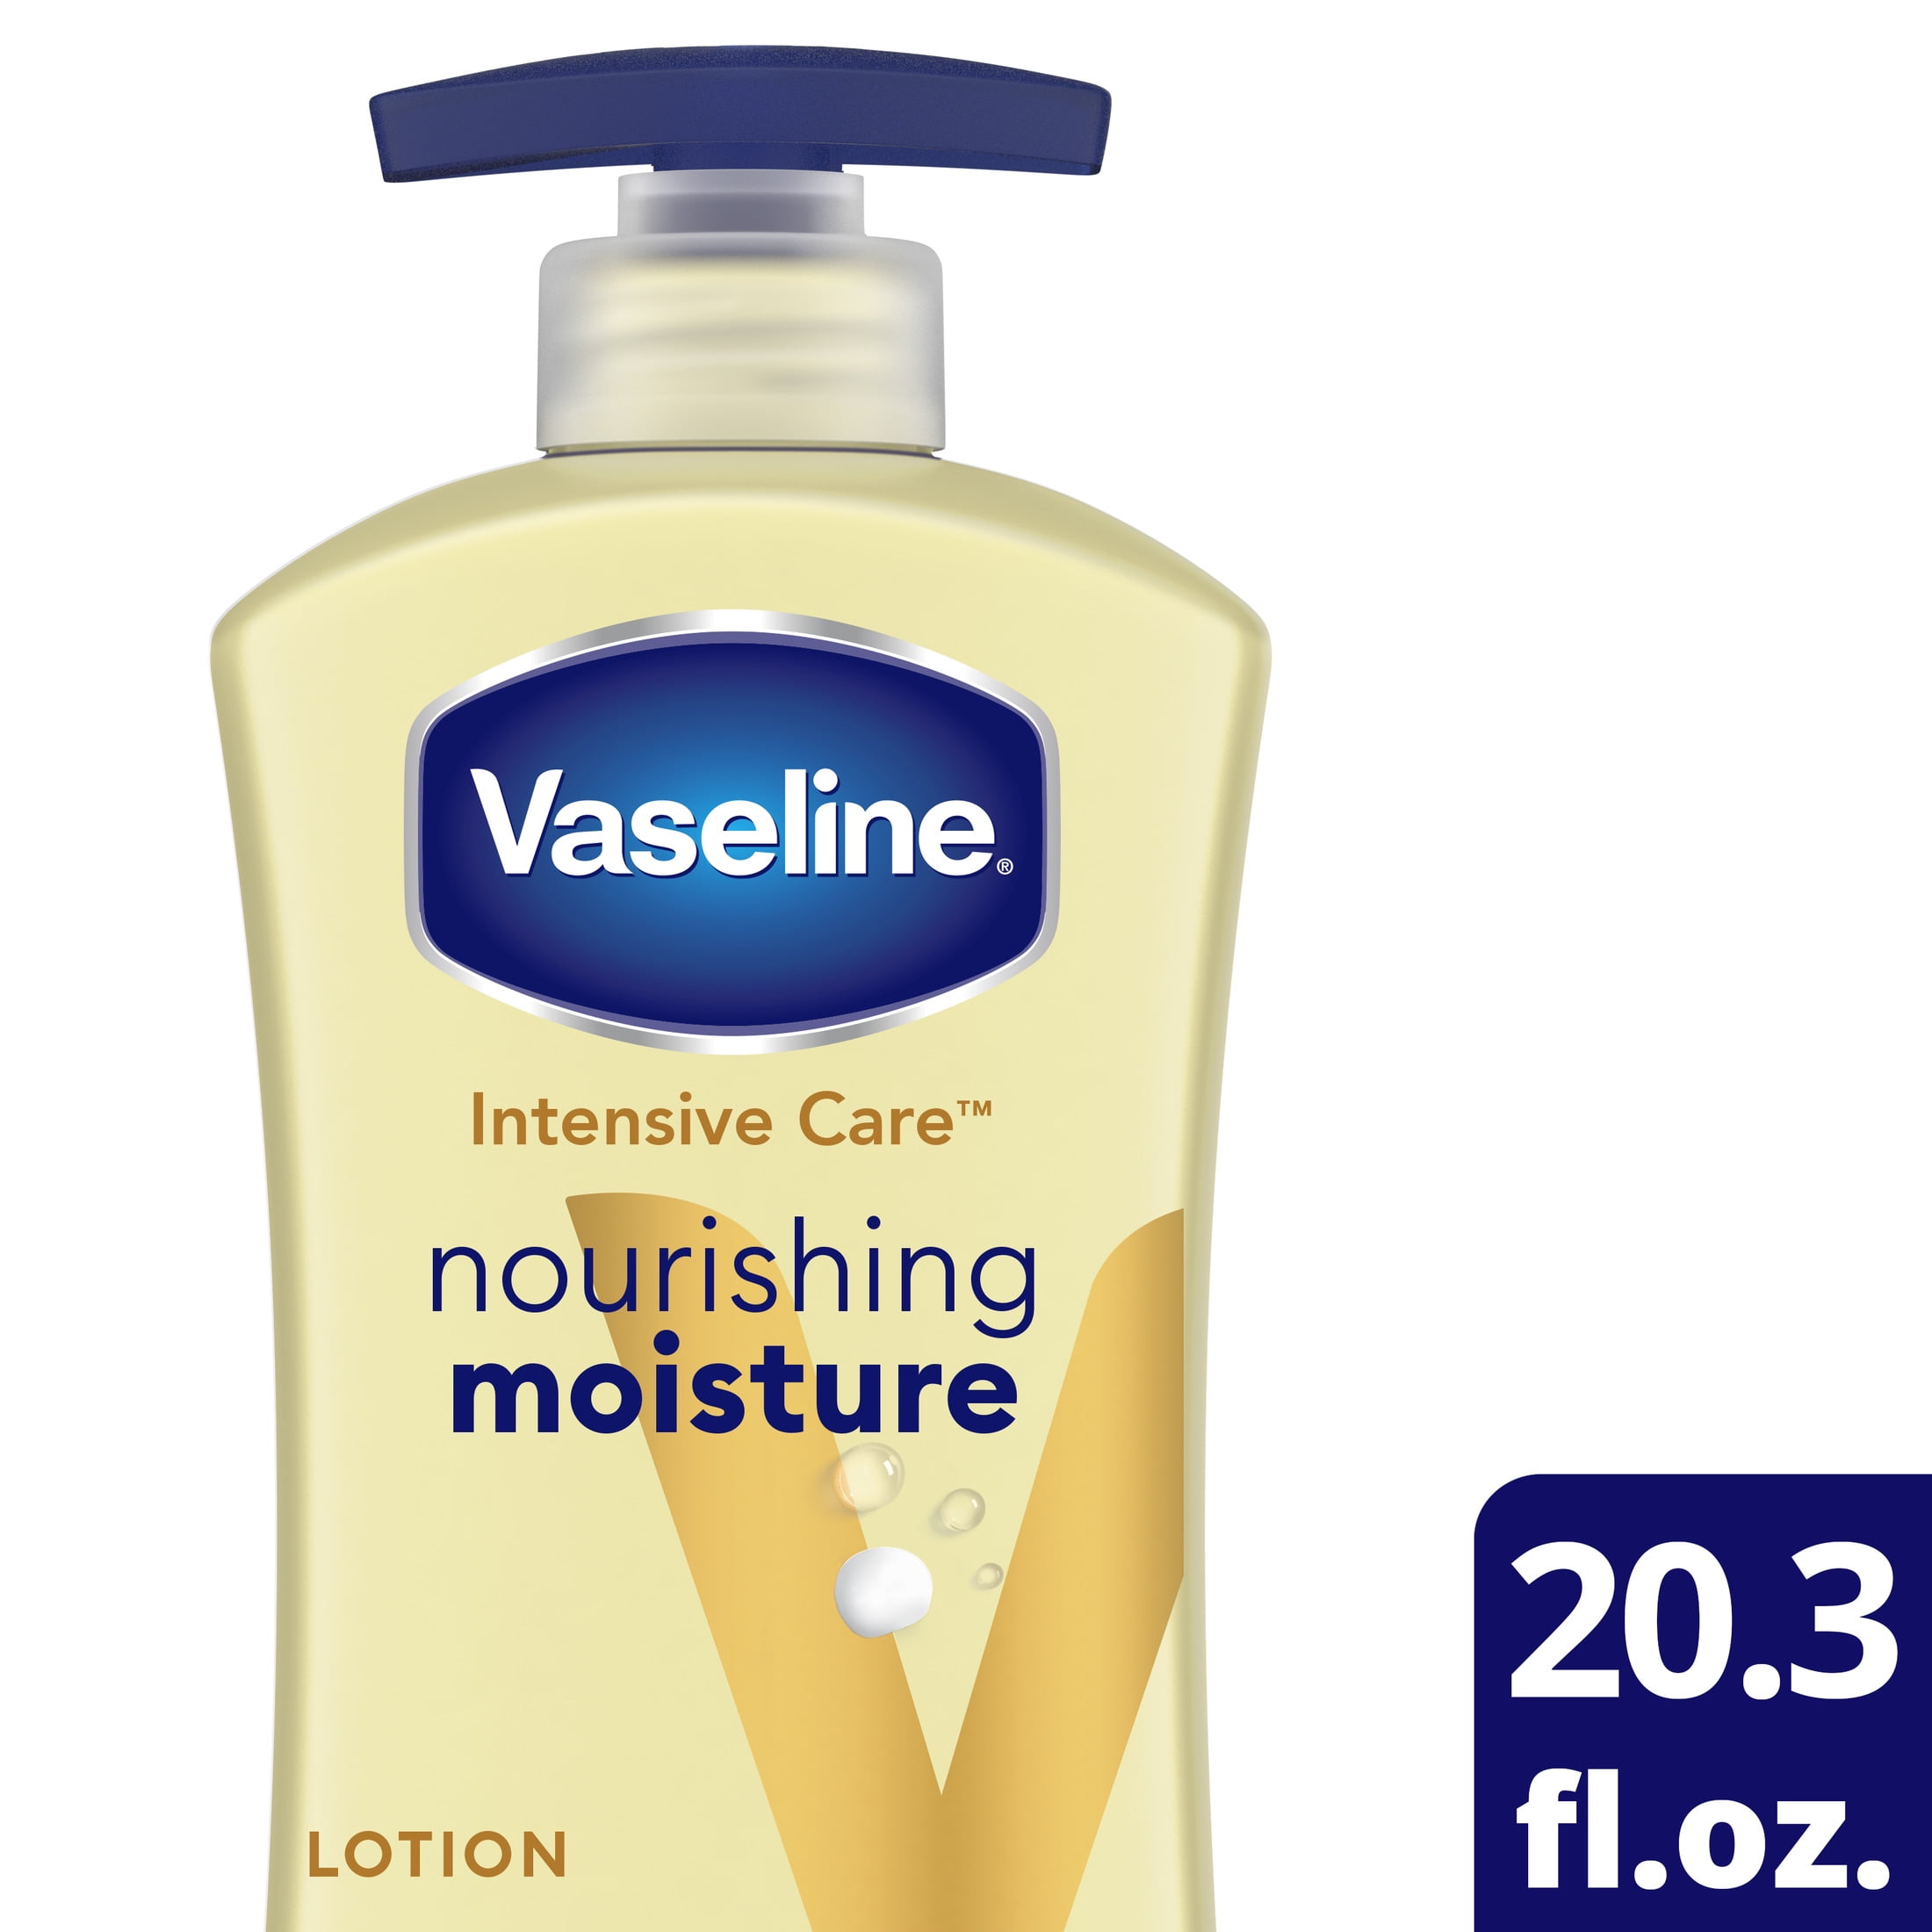 Vaseline Intensive Care Nourishing Moisture Body Lotion, 20.3 oz